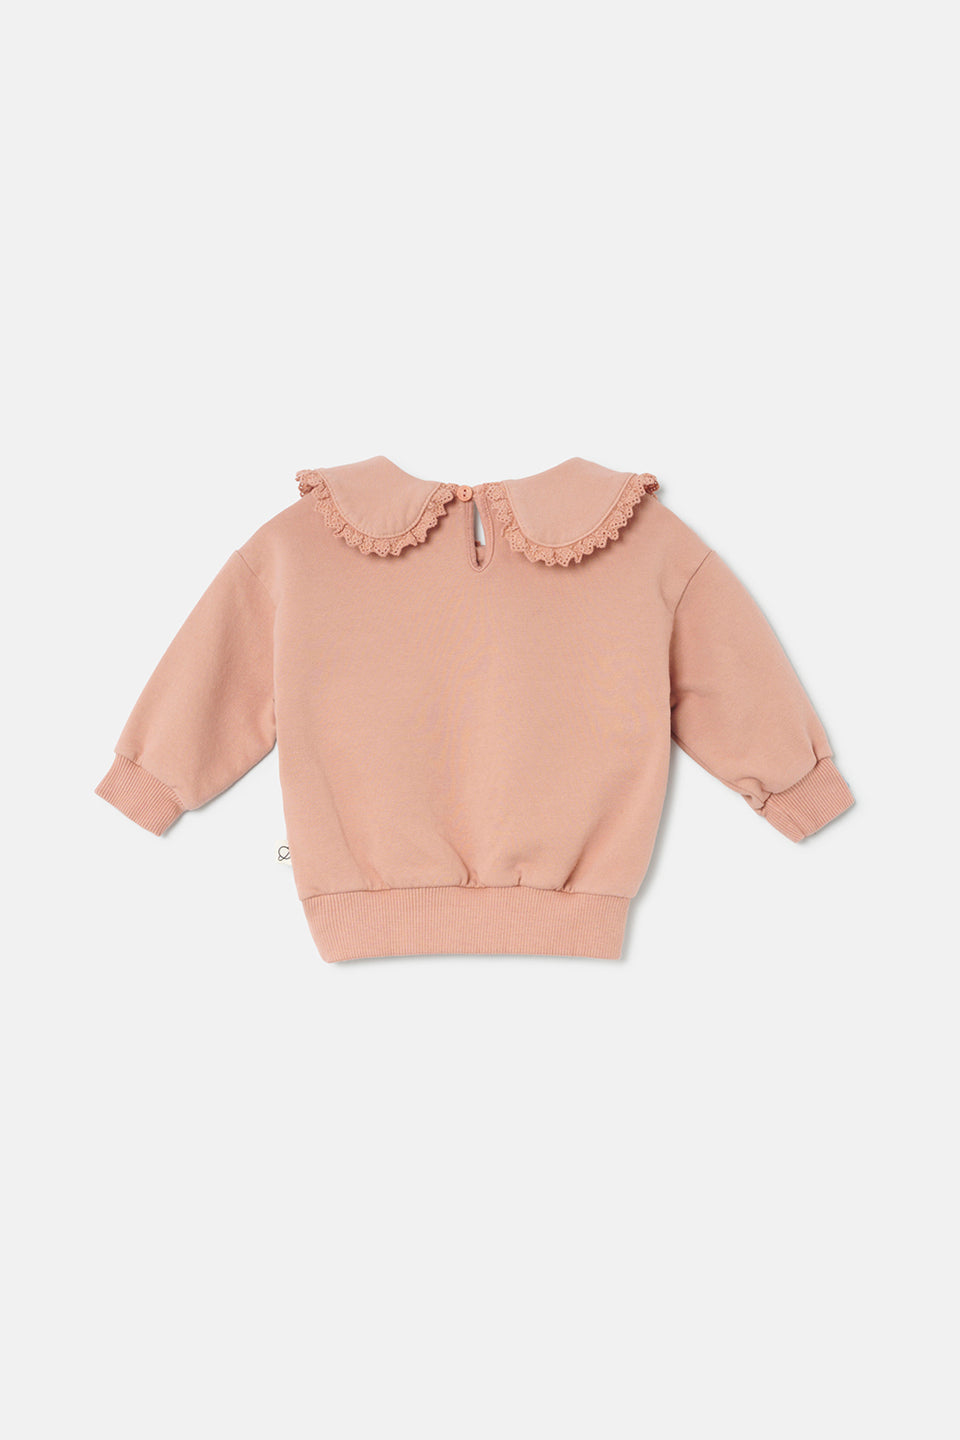 My Little Cozmo Soft-Touch Ruffle Baby Sweatshirt - Pink